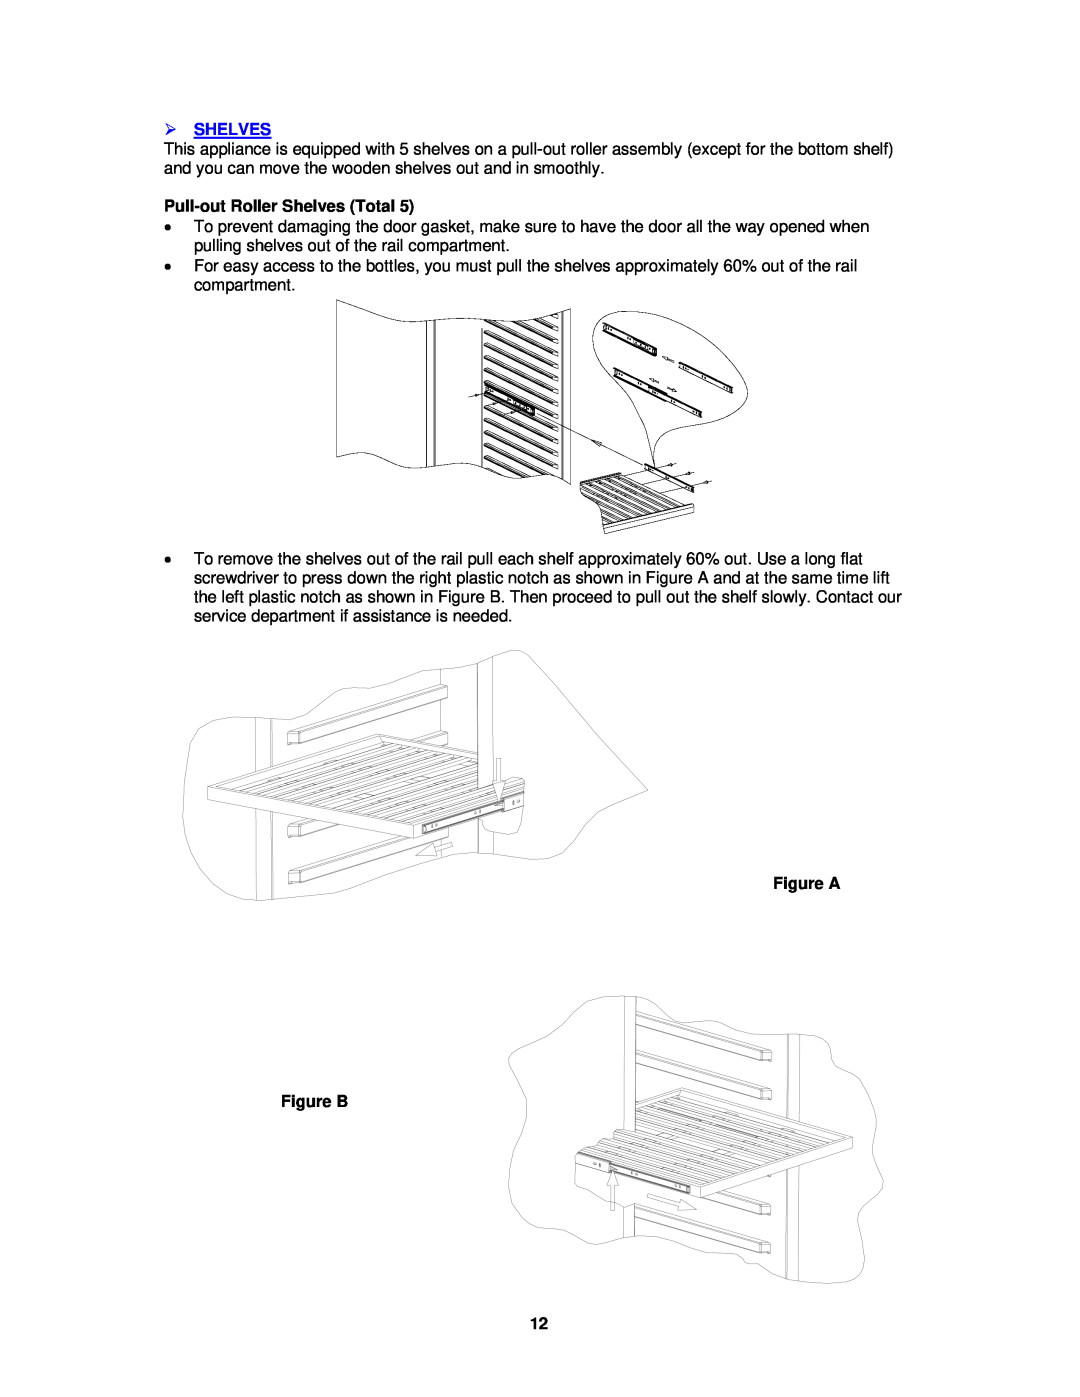 Avanti WCR5449SS instruction manual  Shelves, Pull-out Roller Shelves Total, Figure A Figure B 